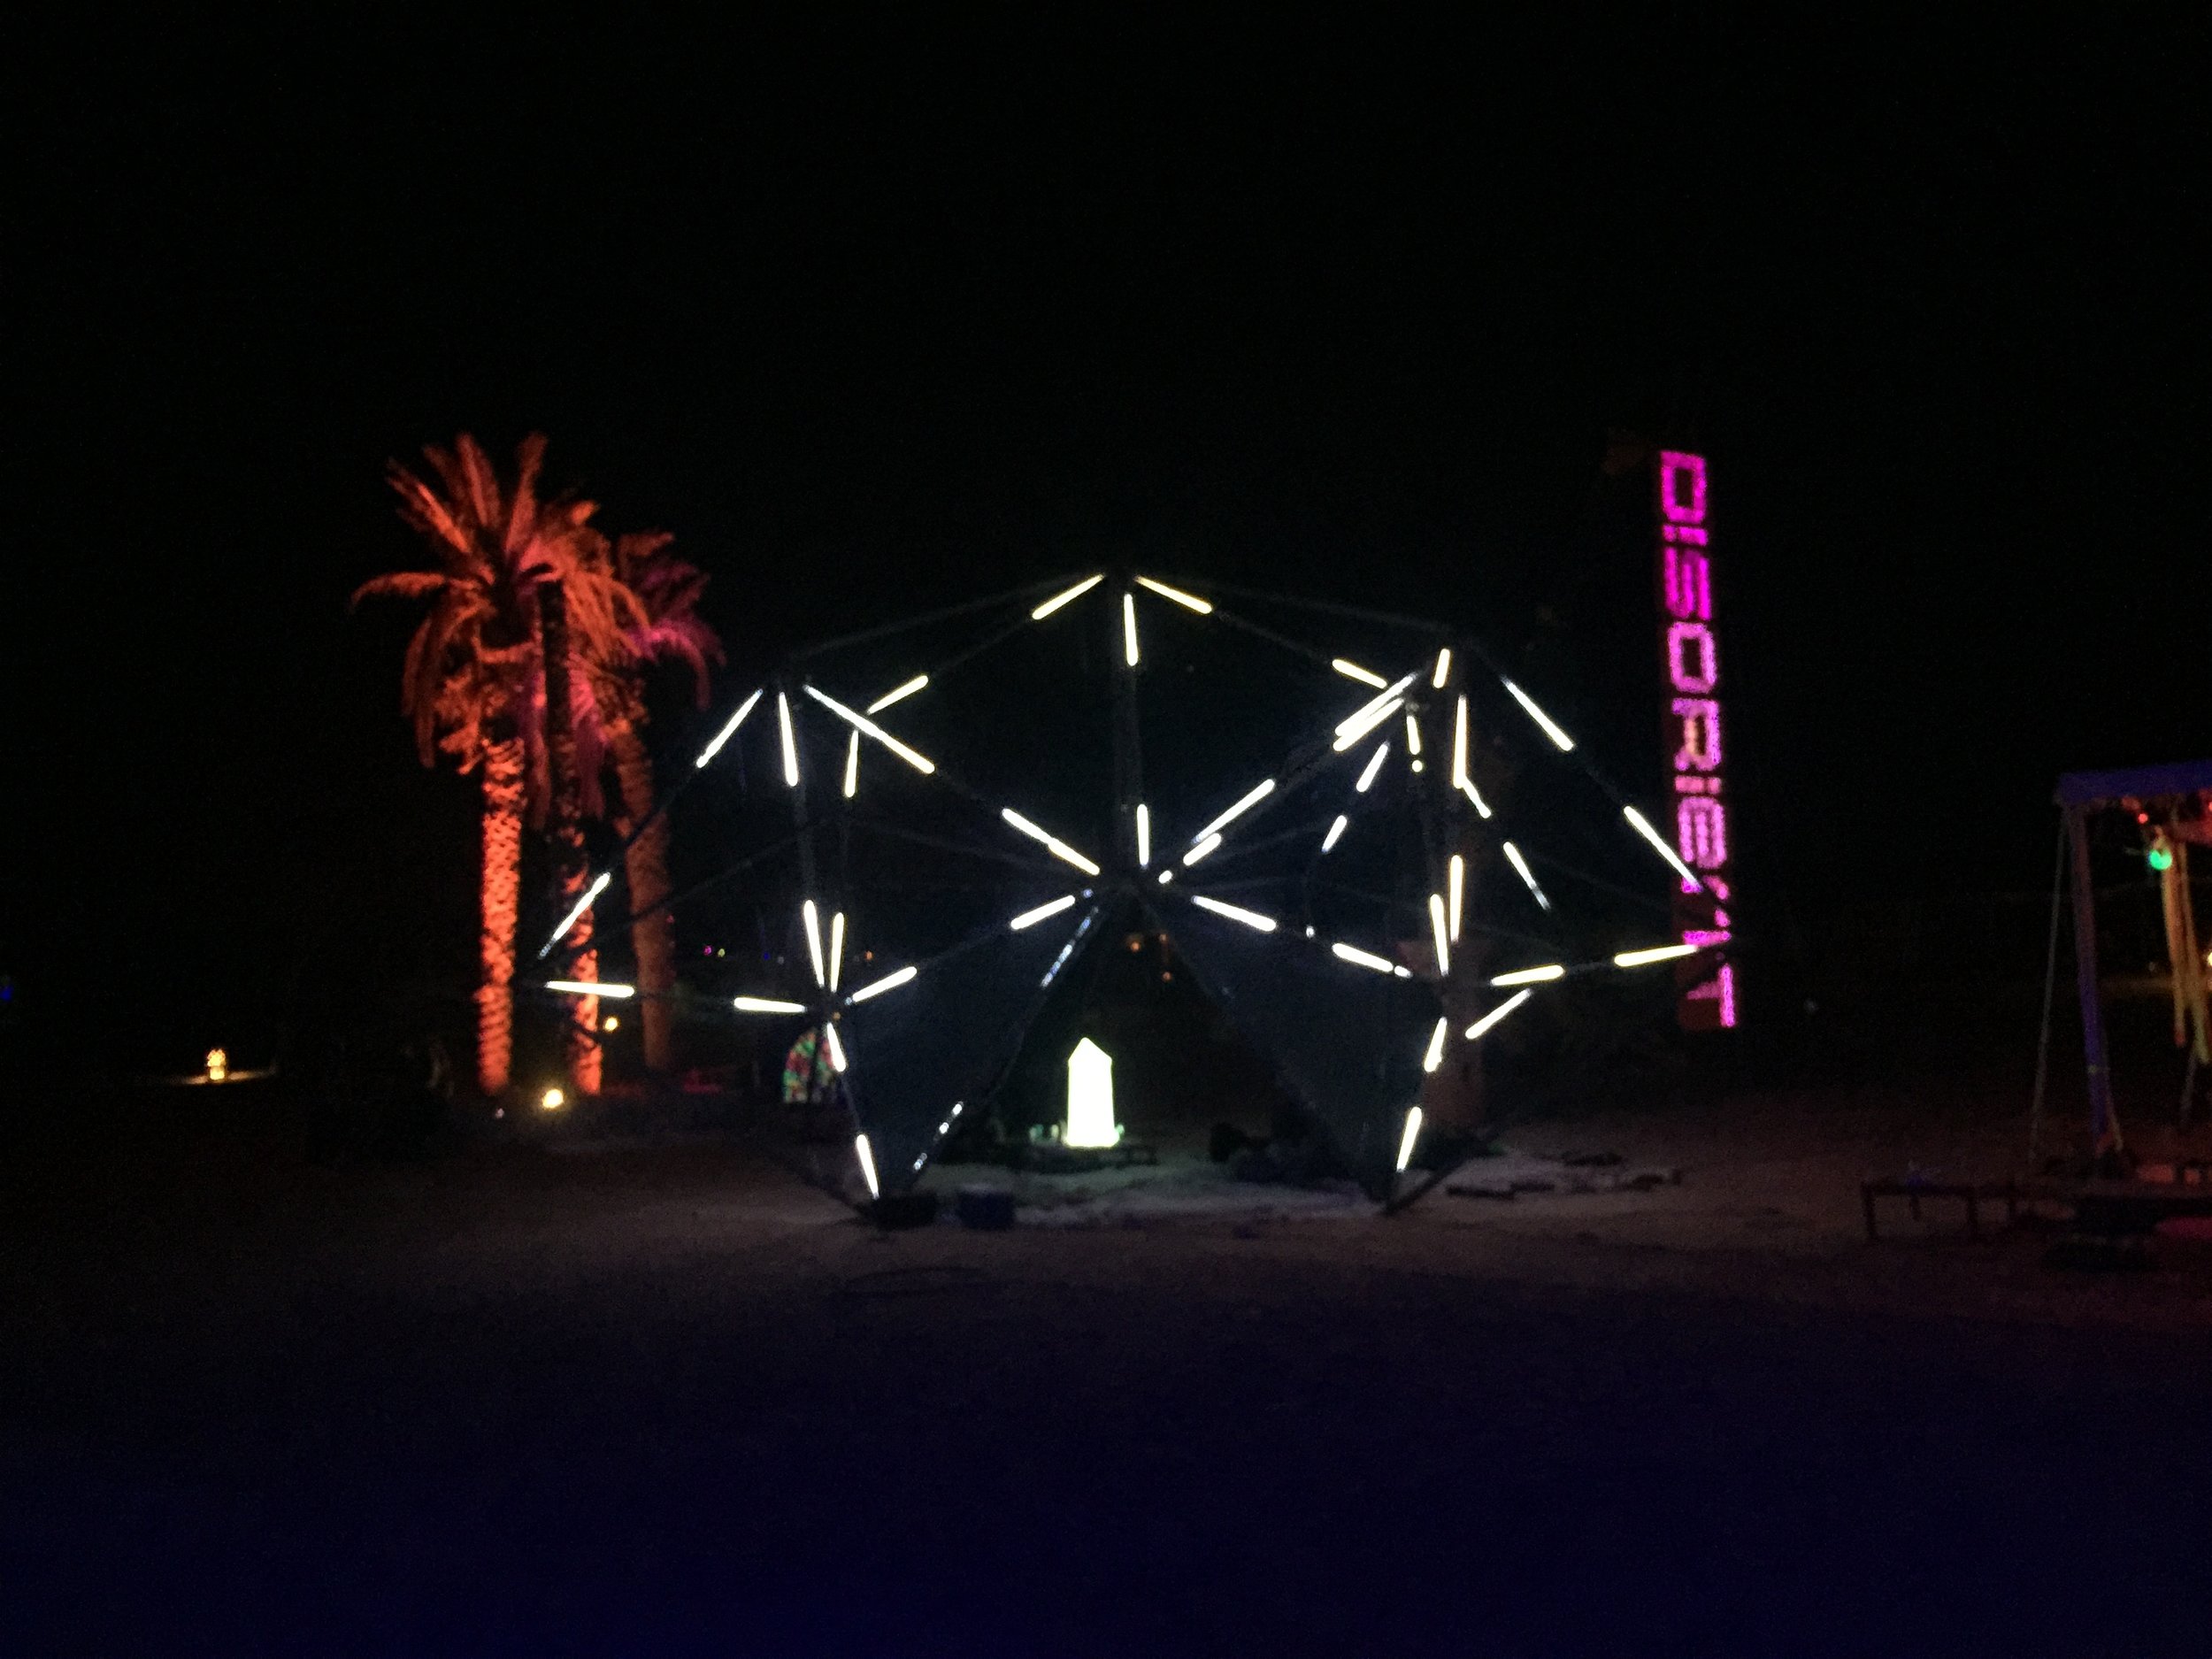  Bedouin Tech&nbsp;  Burning Man community arts and music festival.&nbsp;  Dubai, UAE.&nbsp;  Feb, 2017. 